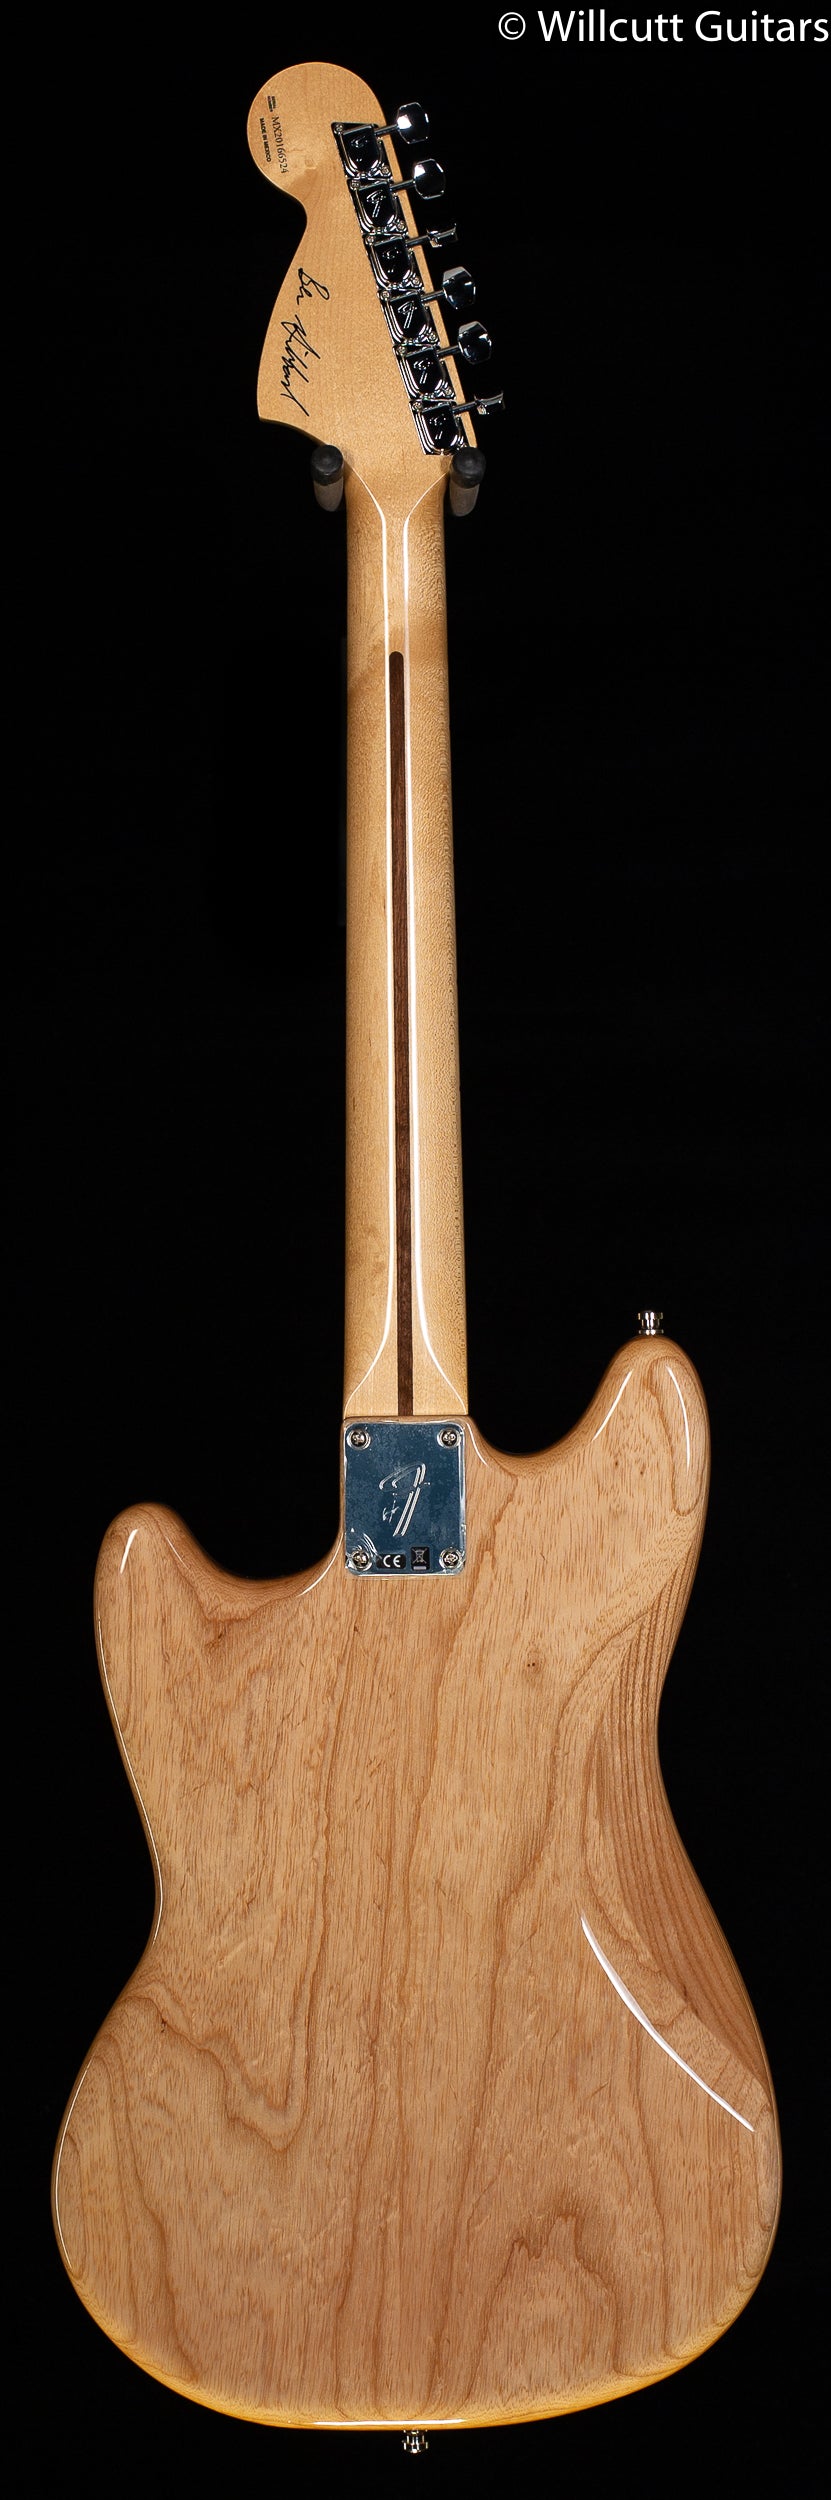 Fender Ben Gibbard Mustang - Willcutt Guitars